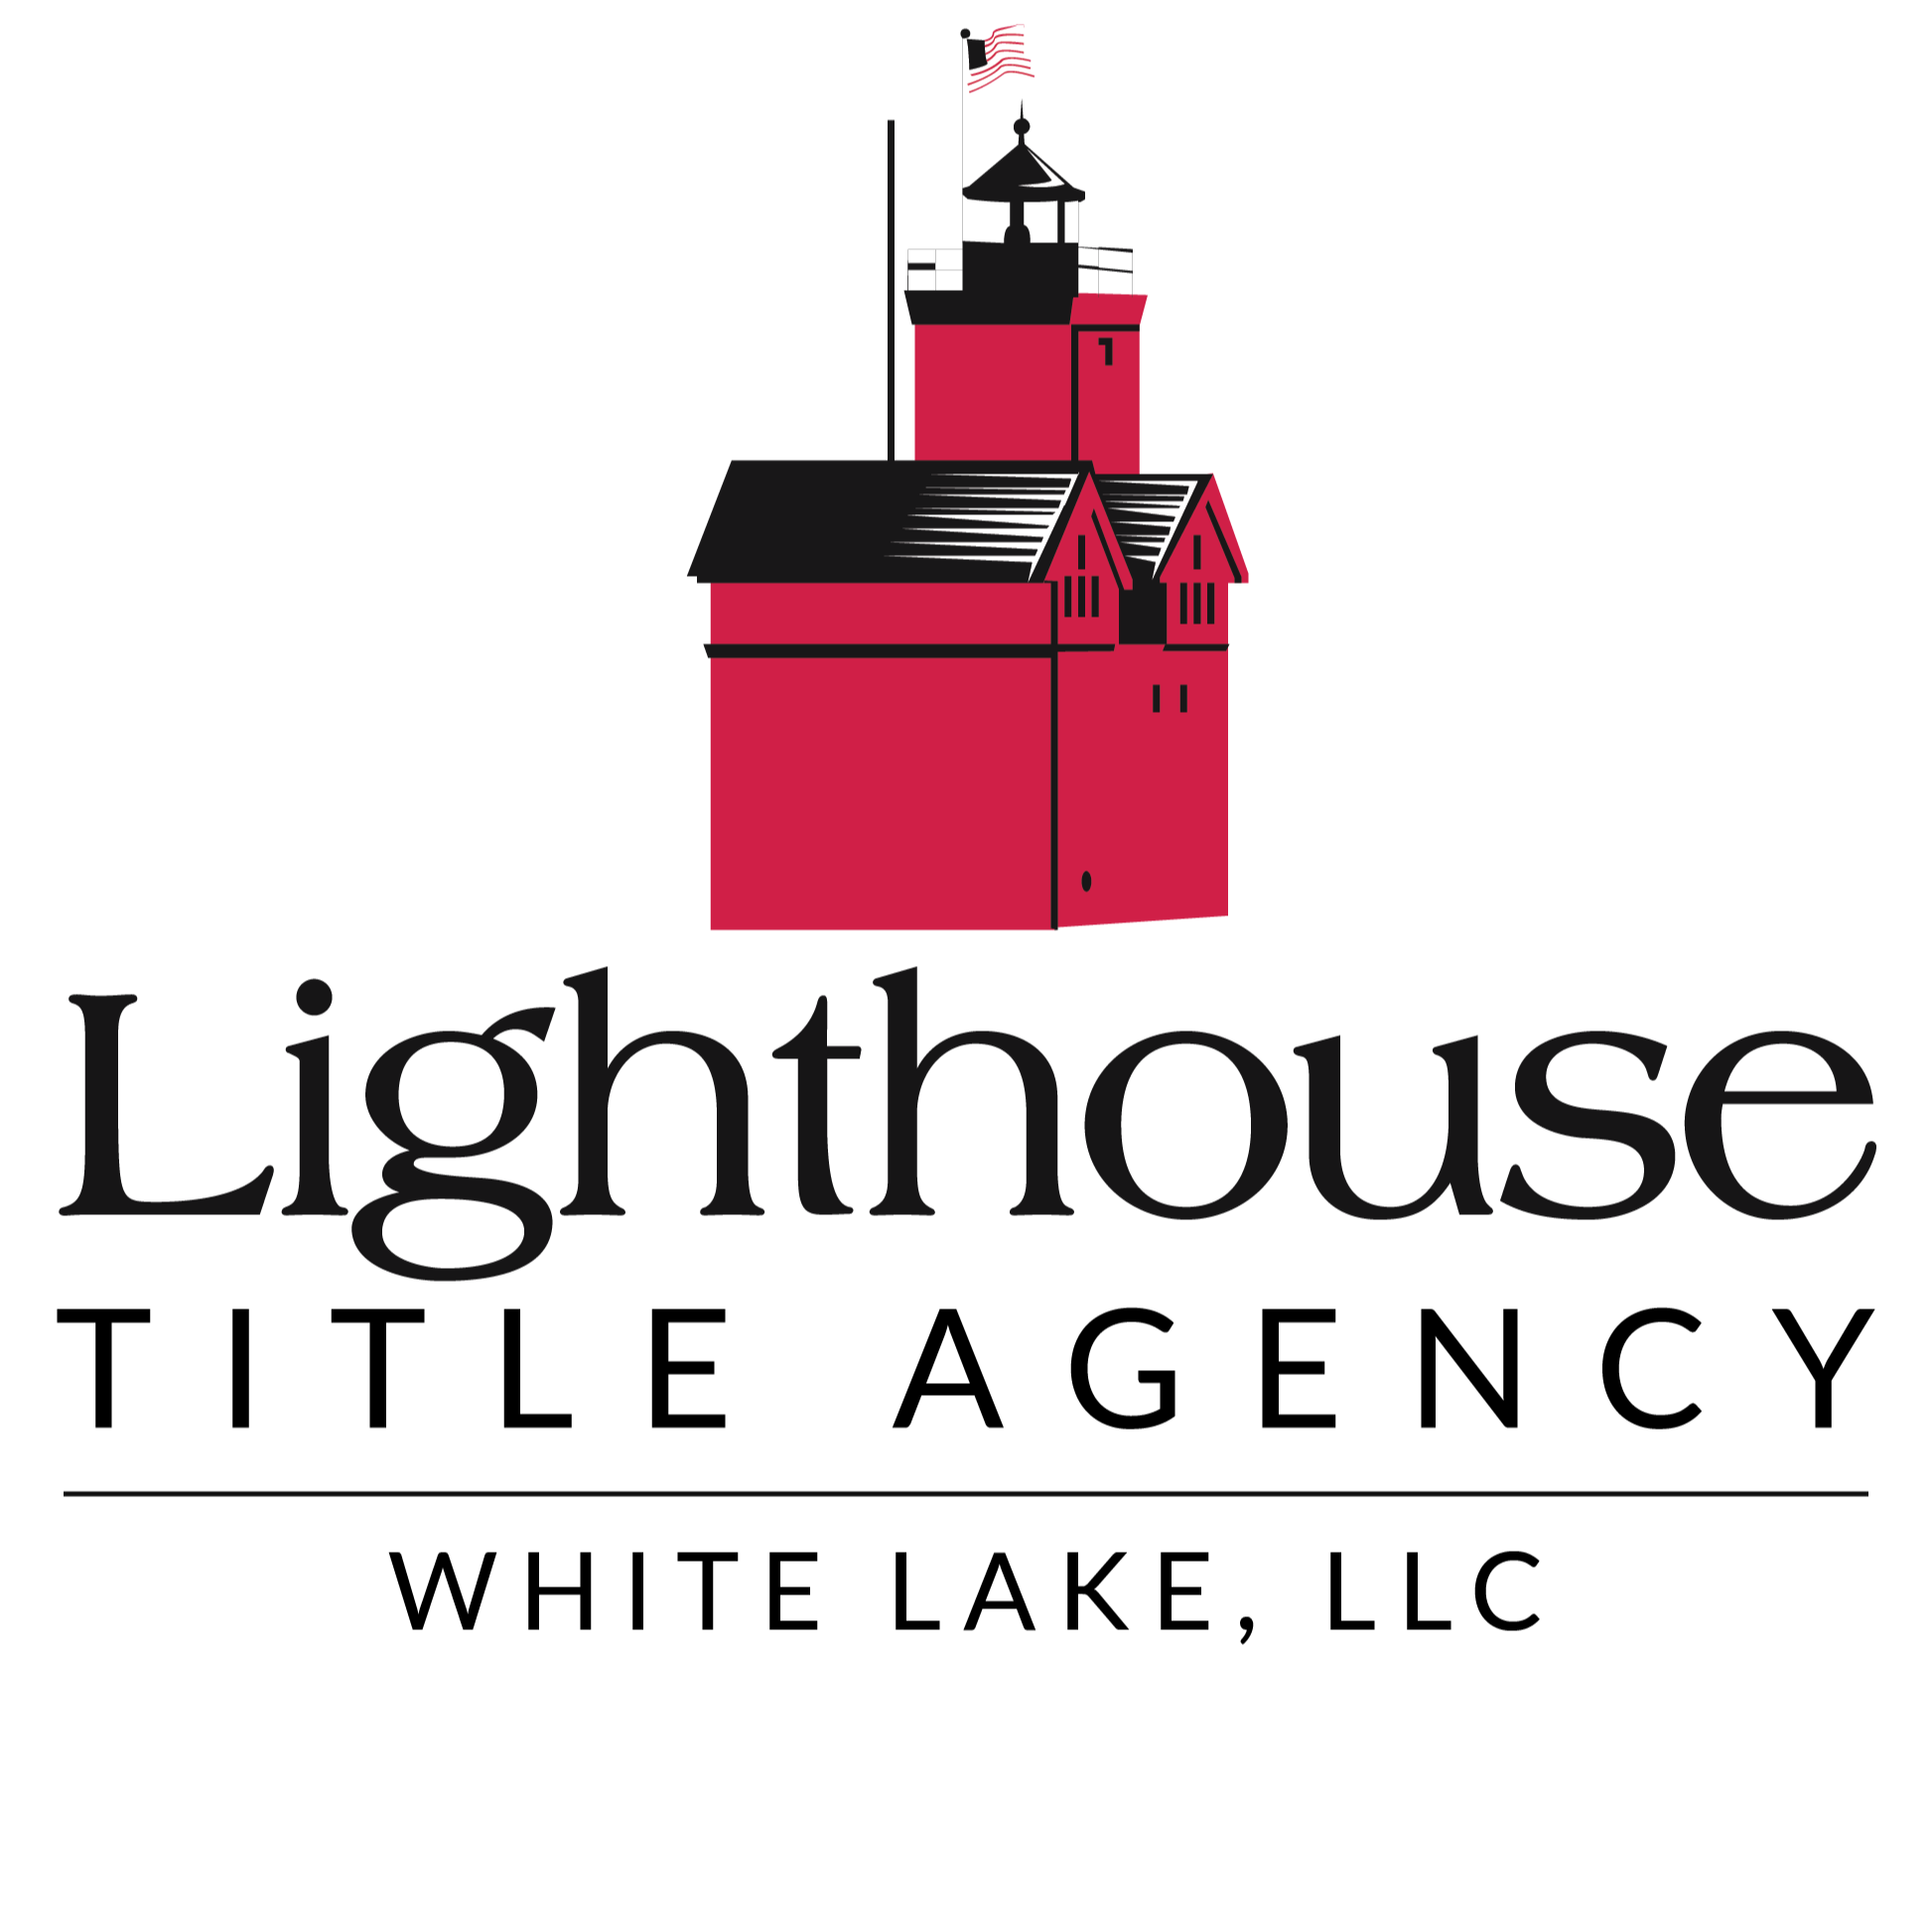 Lighthouse Title Agency - White Lake, LLC